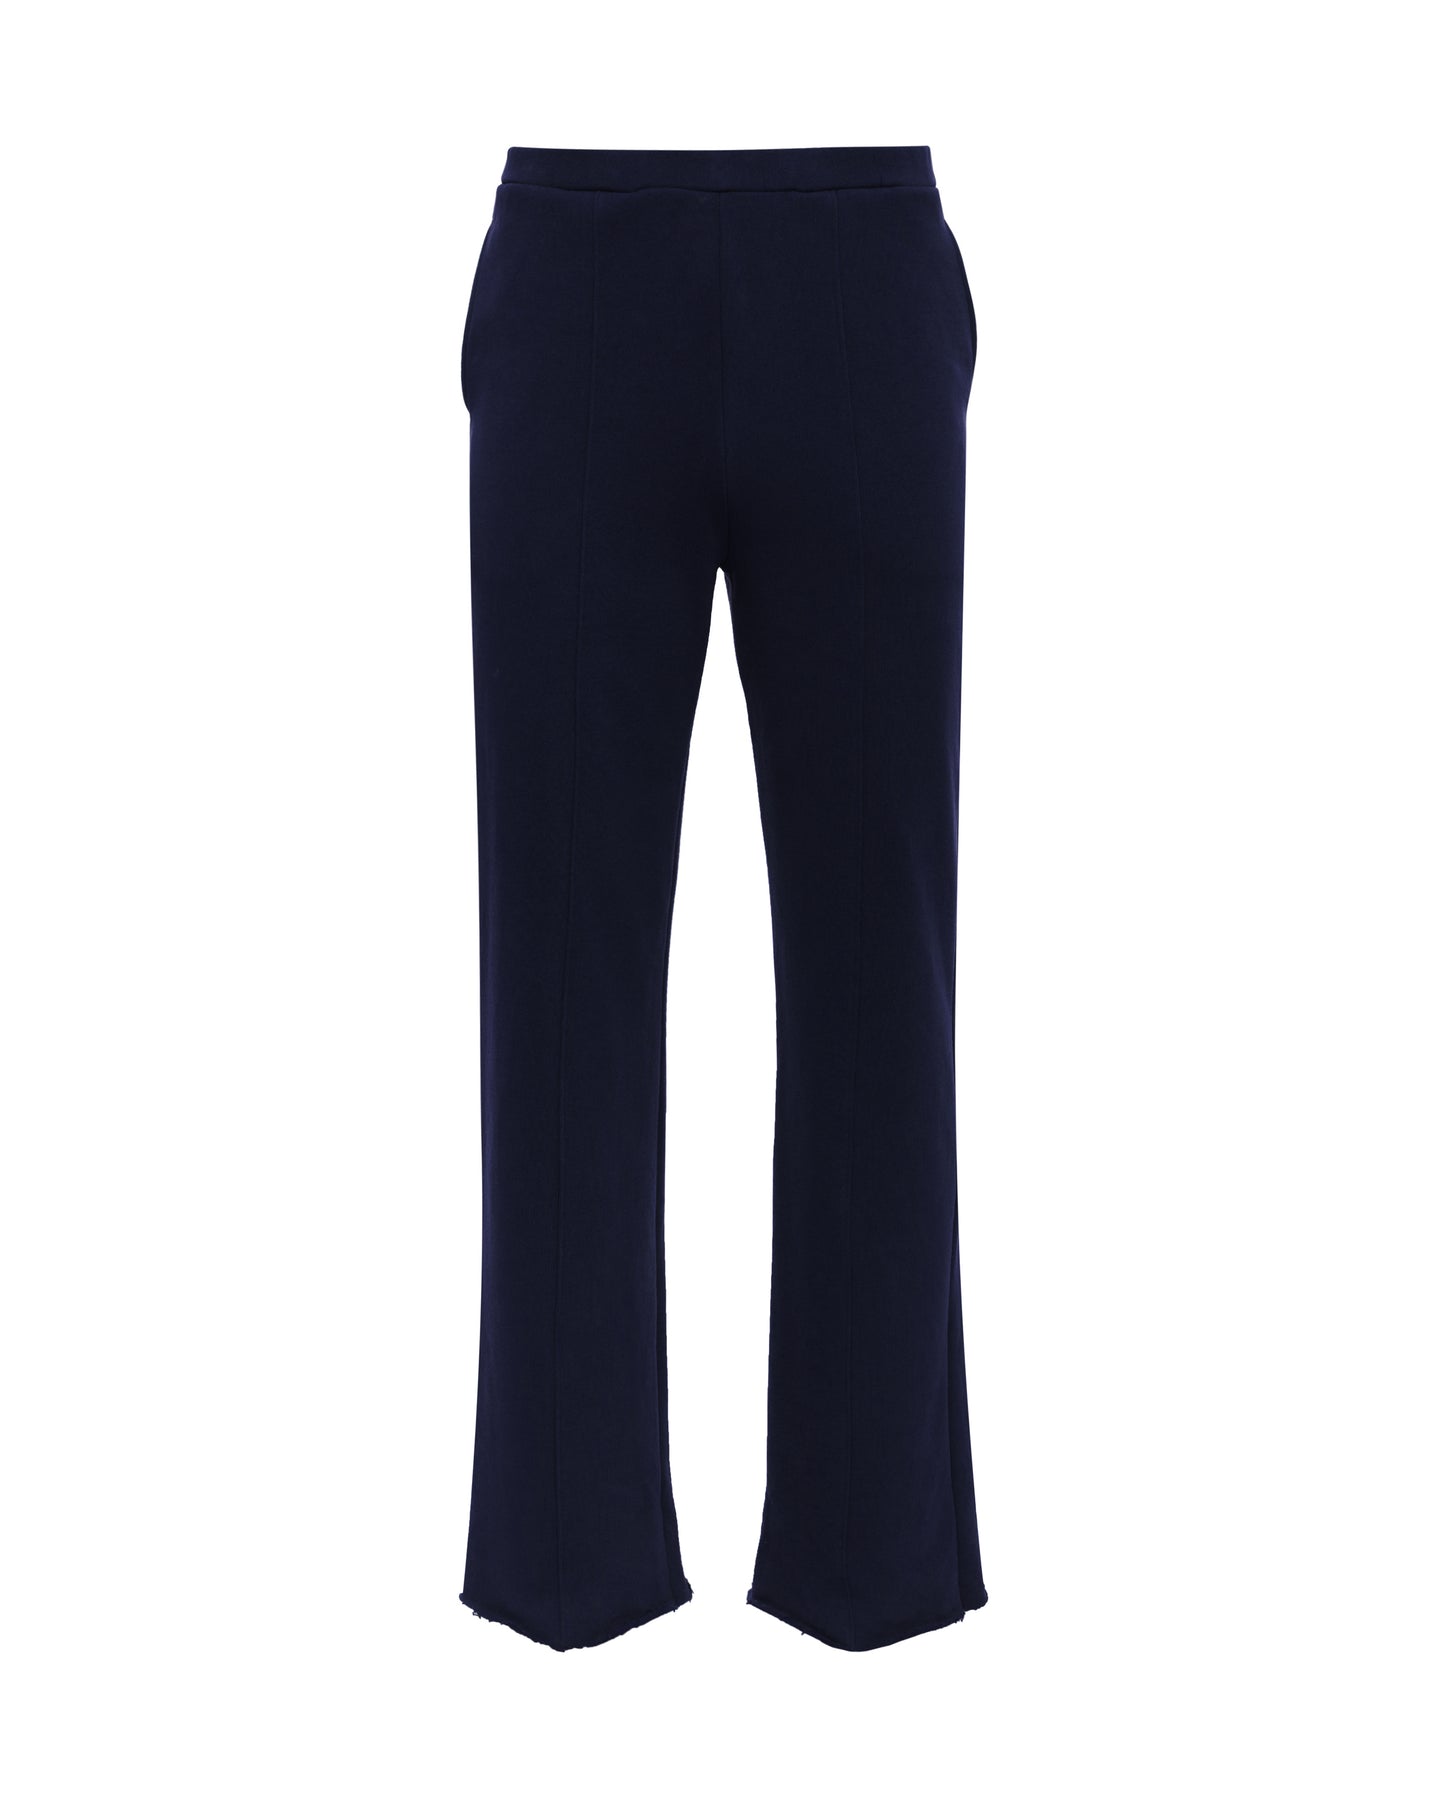 navy blue fleece cotton straight leg drawstring sweatpants raw hem